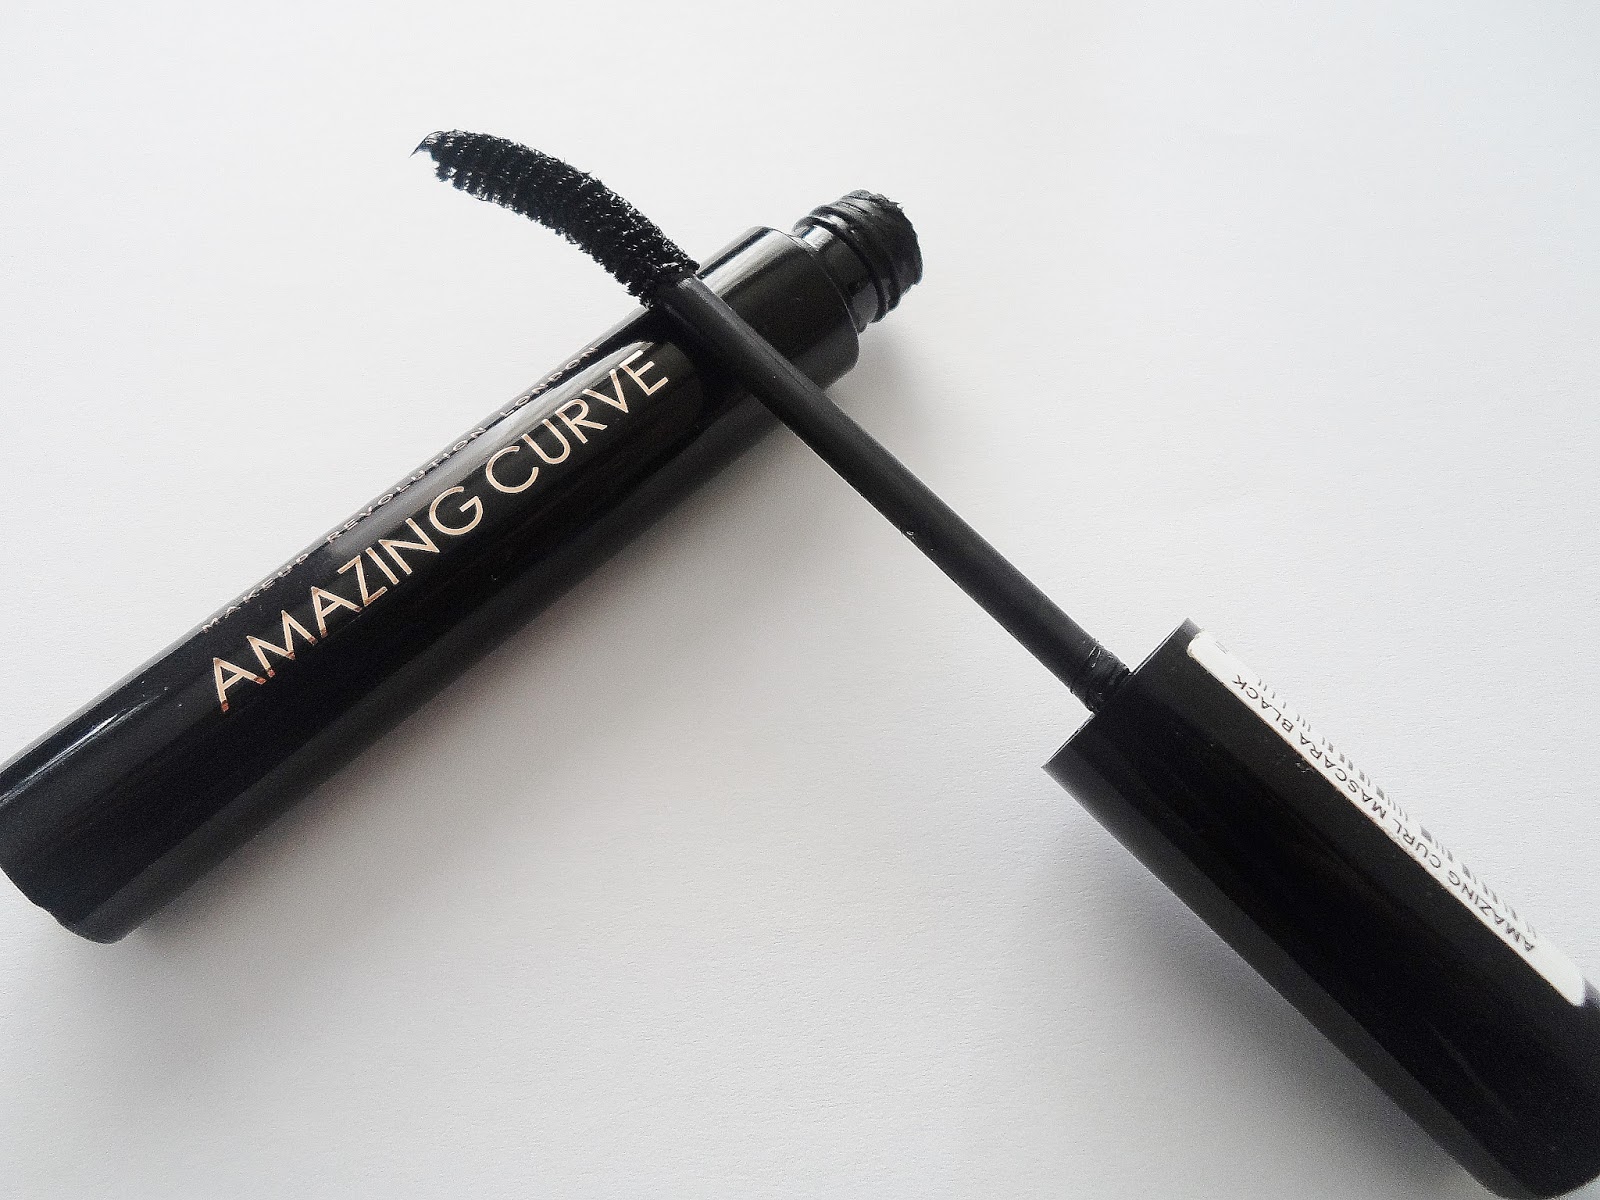 Usa awesome mascara revolution makeup lash wholesale